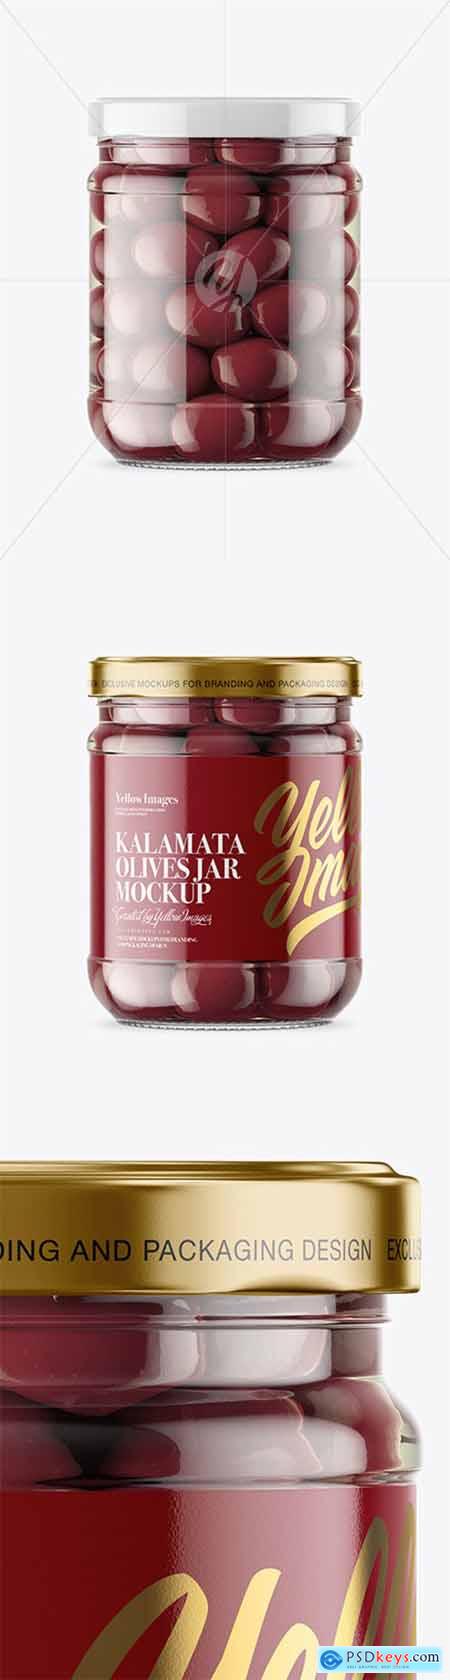 Clear Glass Jar with Kalamata Olives Mockup 46496